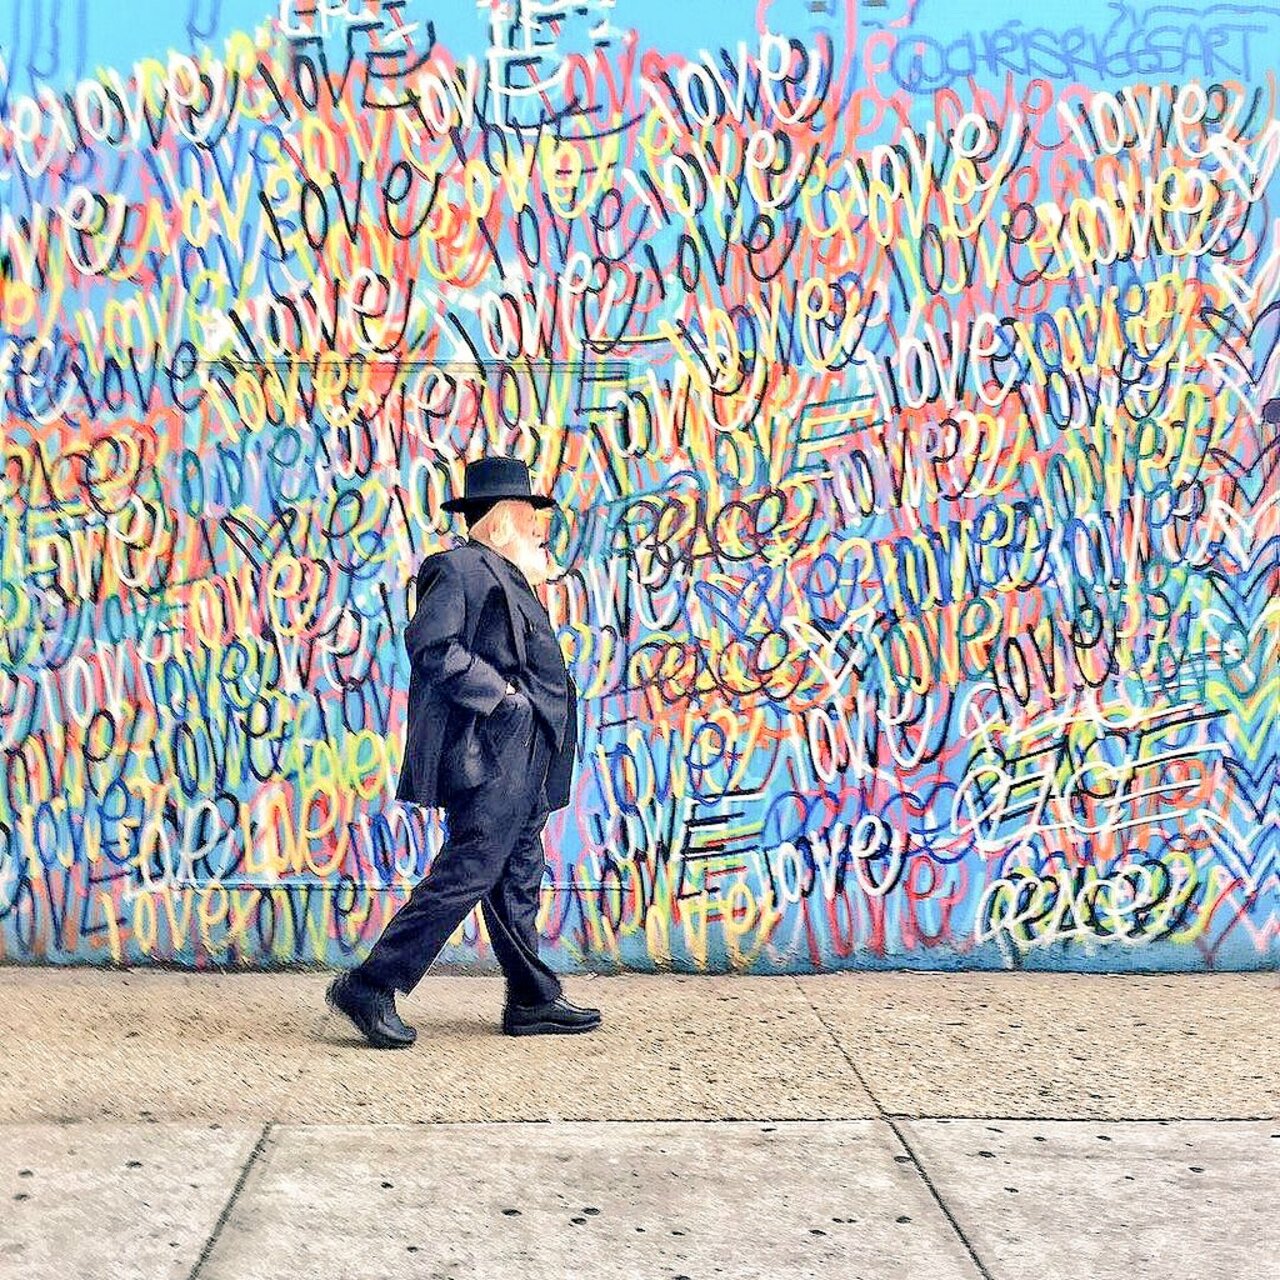 MT @circumjacent: #NewYorkCity #graffiti photo by @trinnadeleon https://instagram.com/p/9L2-R6NA5E/ #StreetArt https://t.co/cldOmDwlft